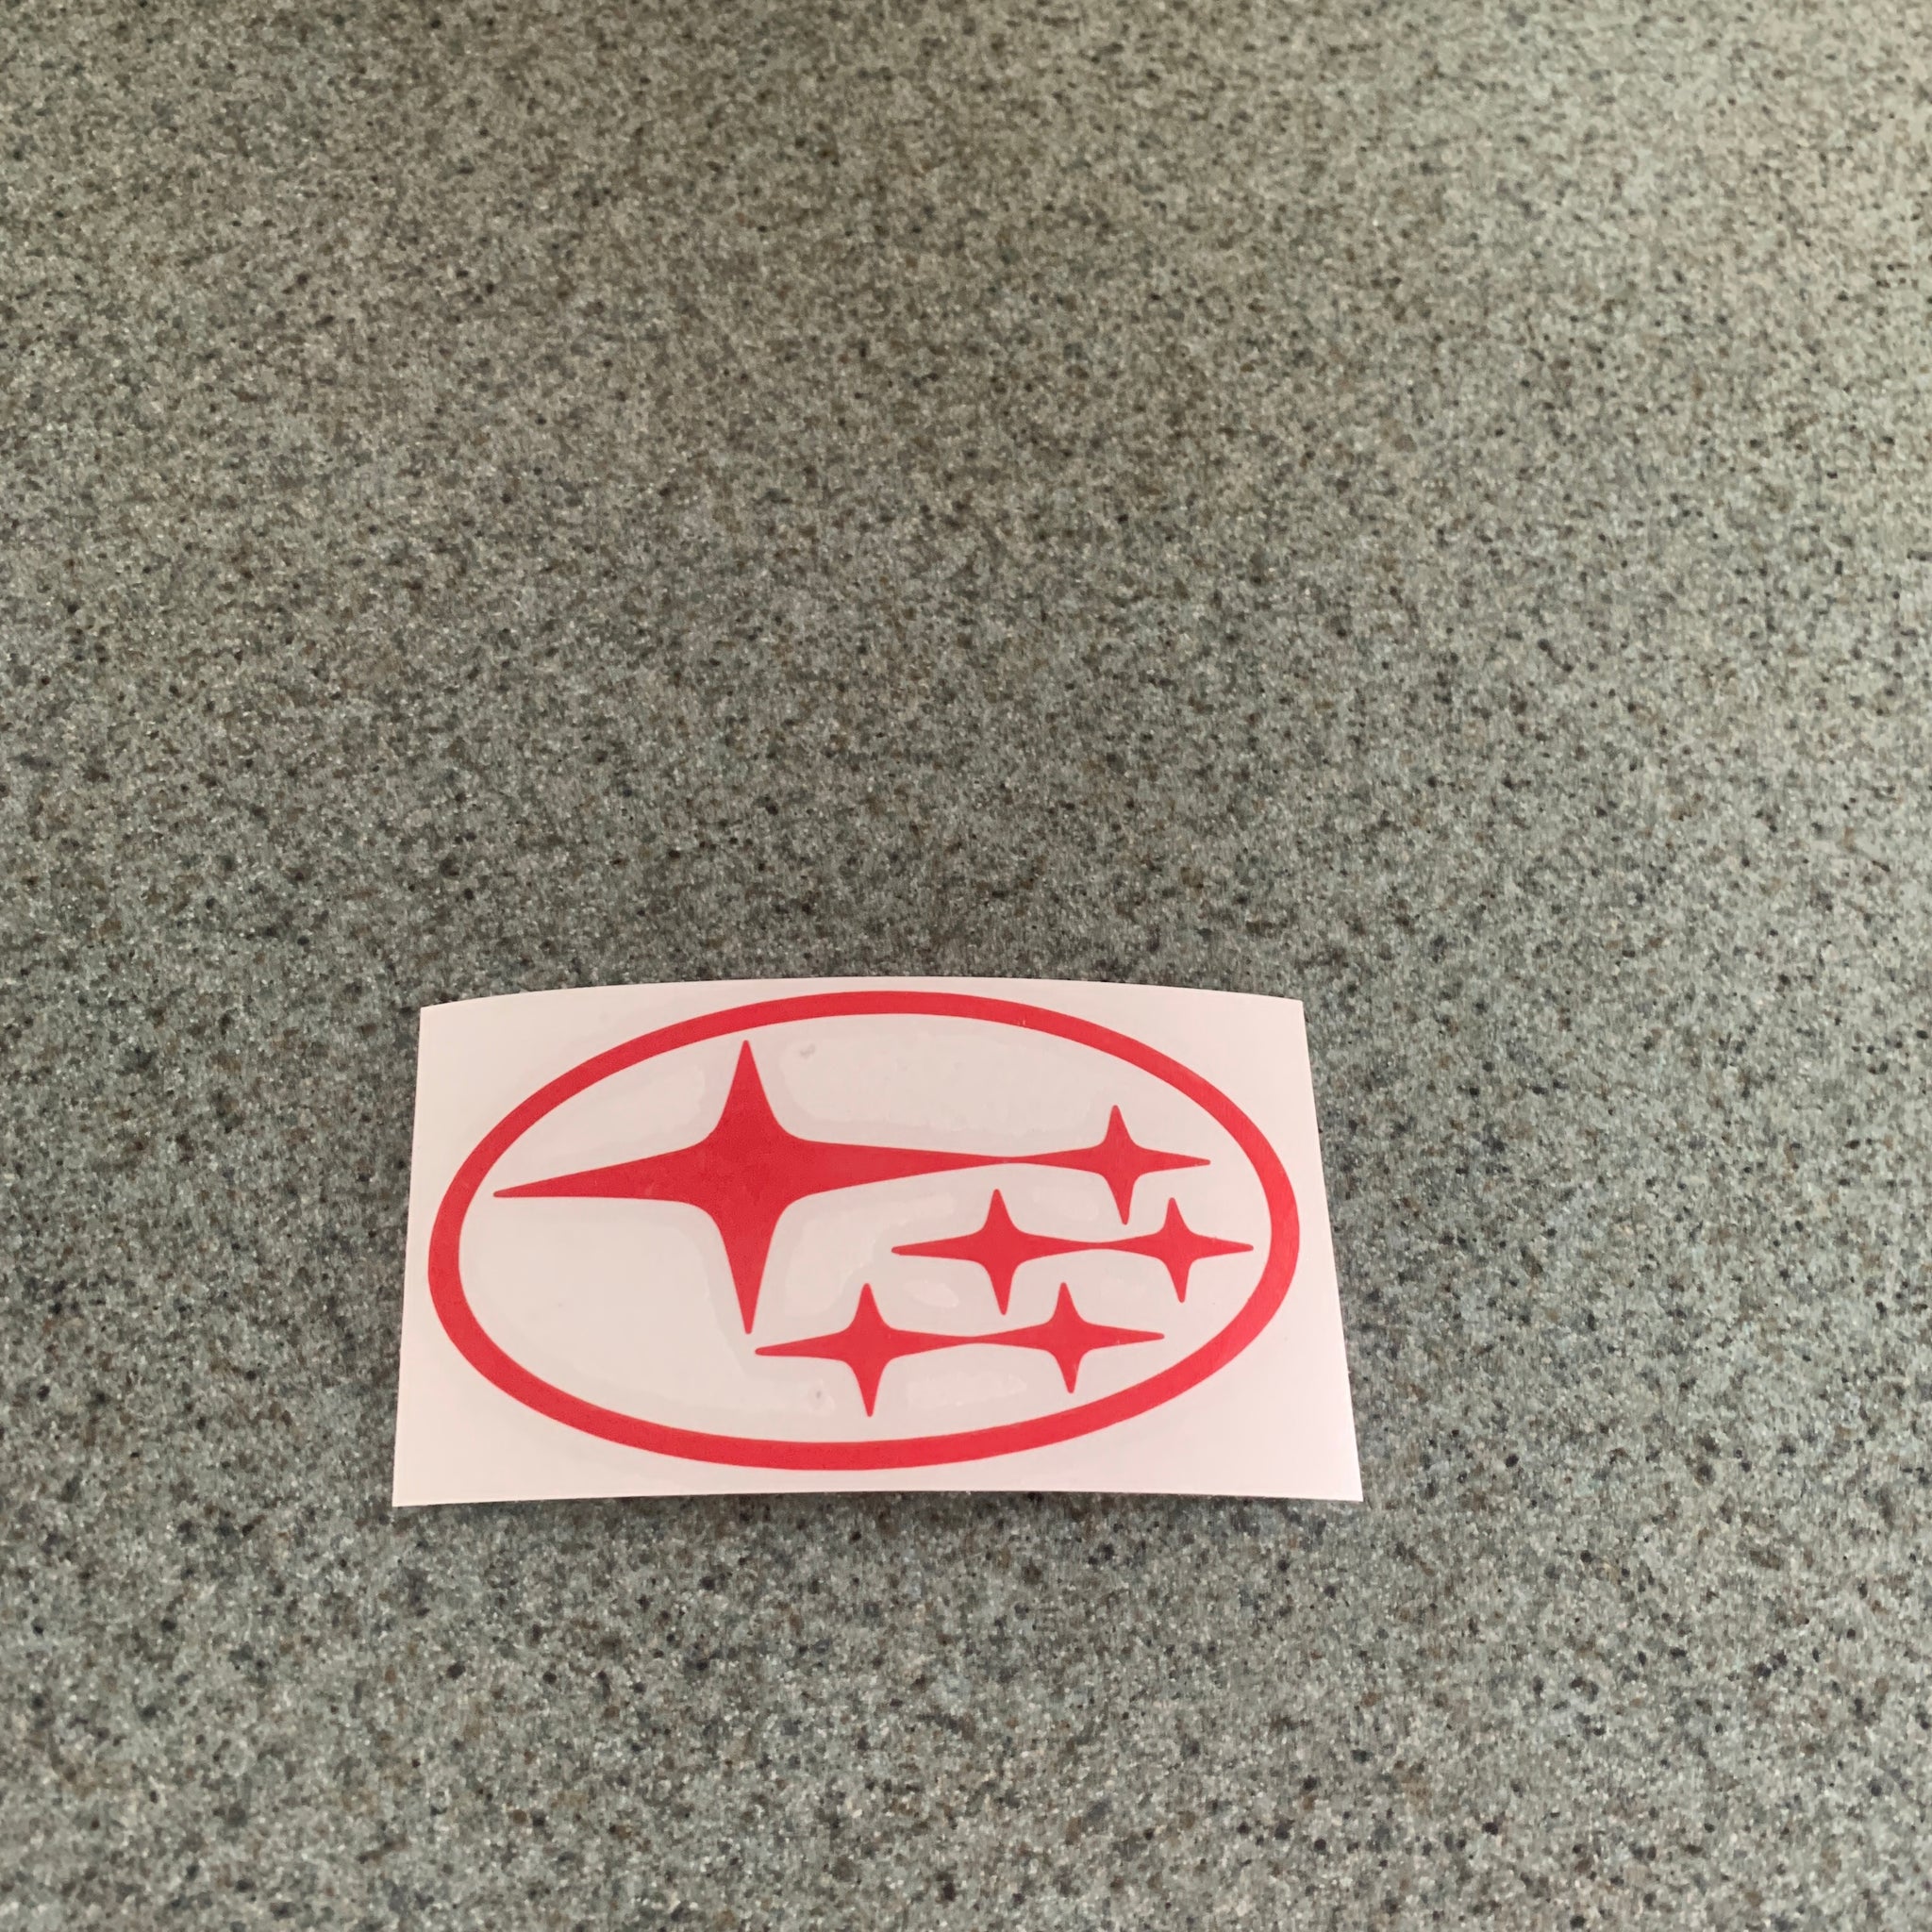 Subaru Emblem Sticker